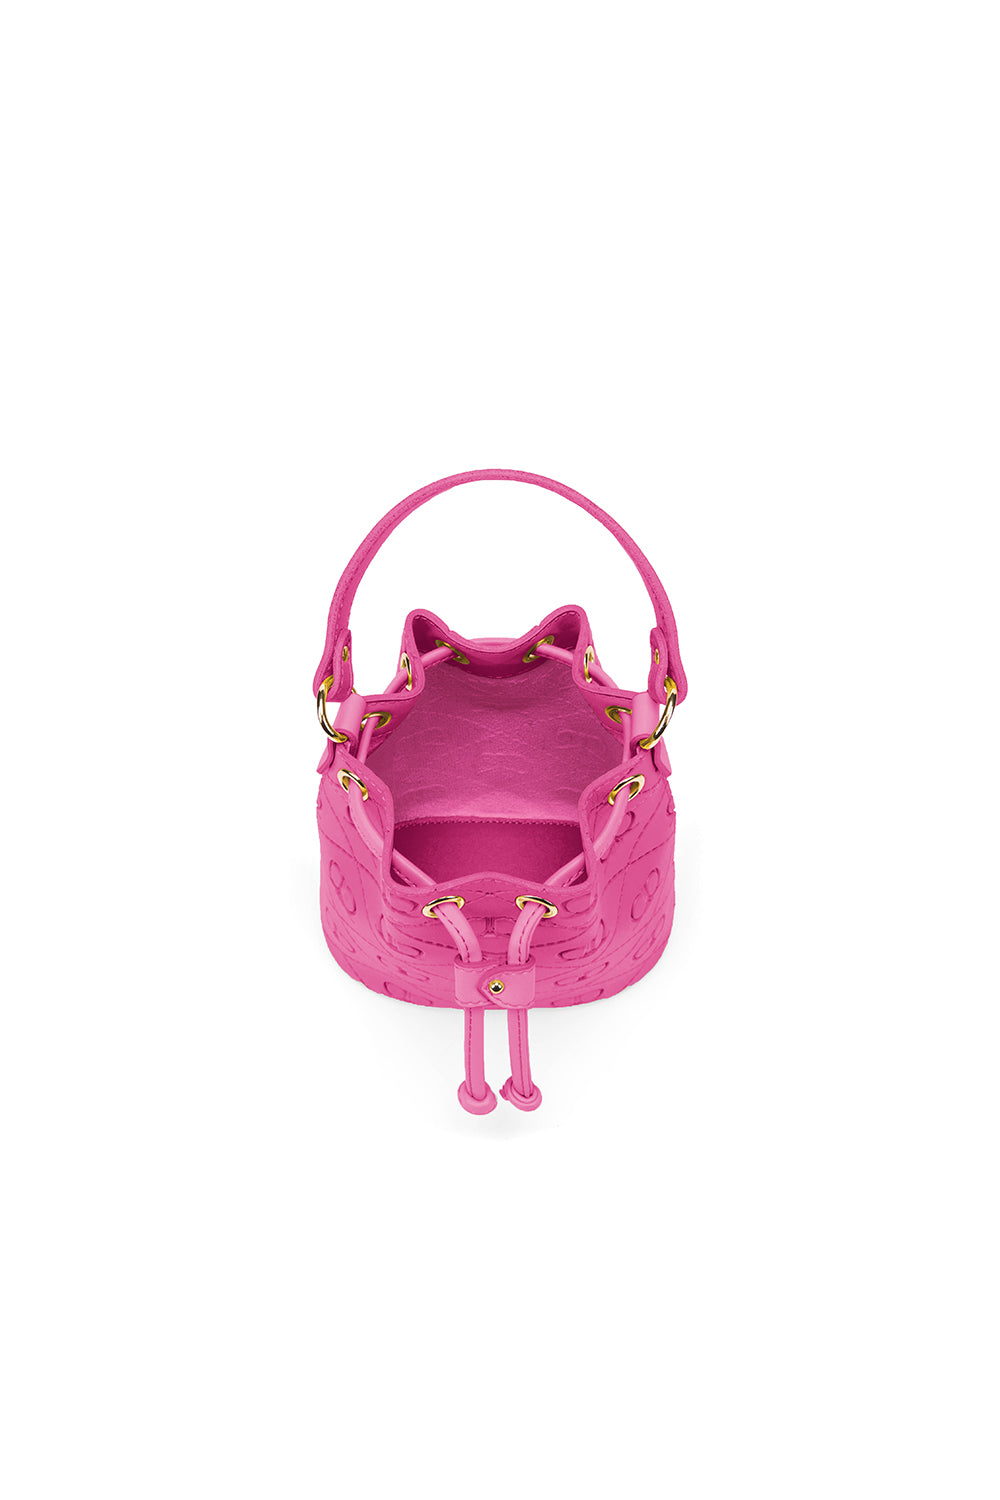 RR Bucket Mini in Shocking Pink